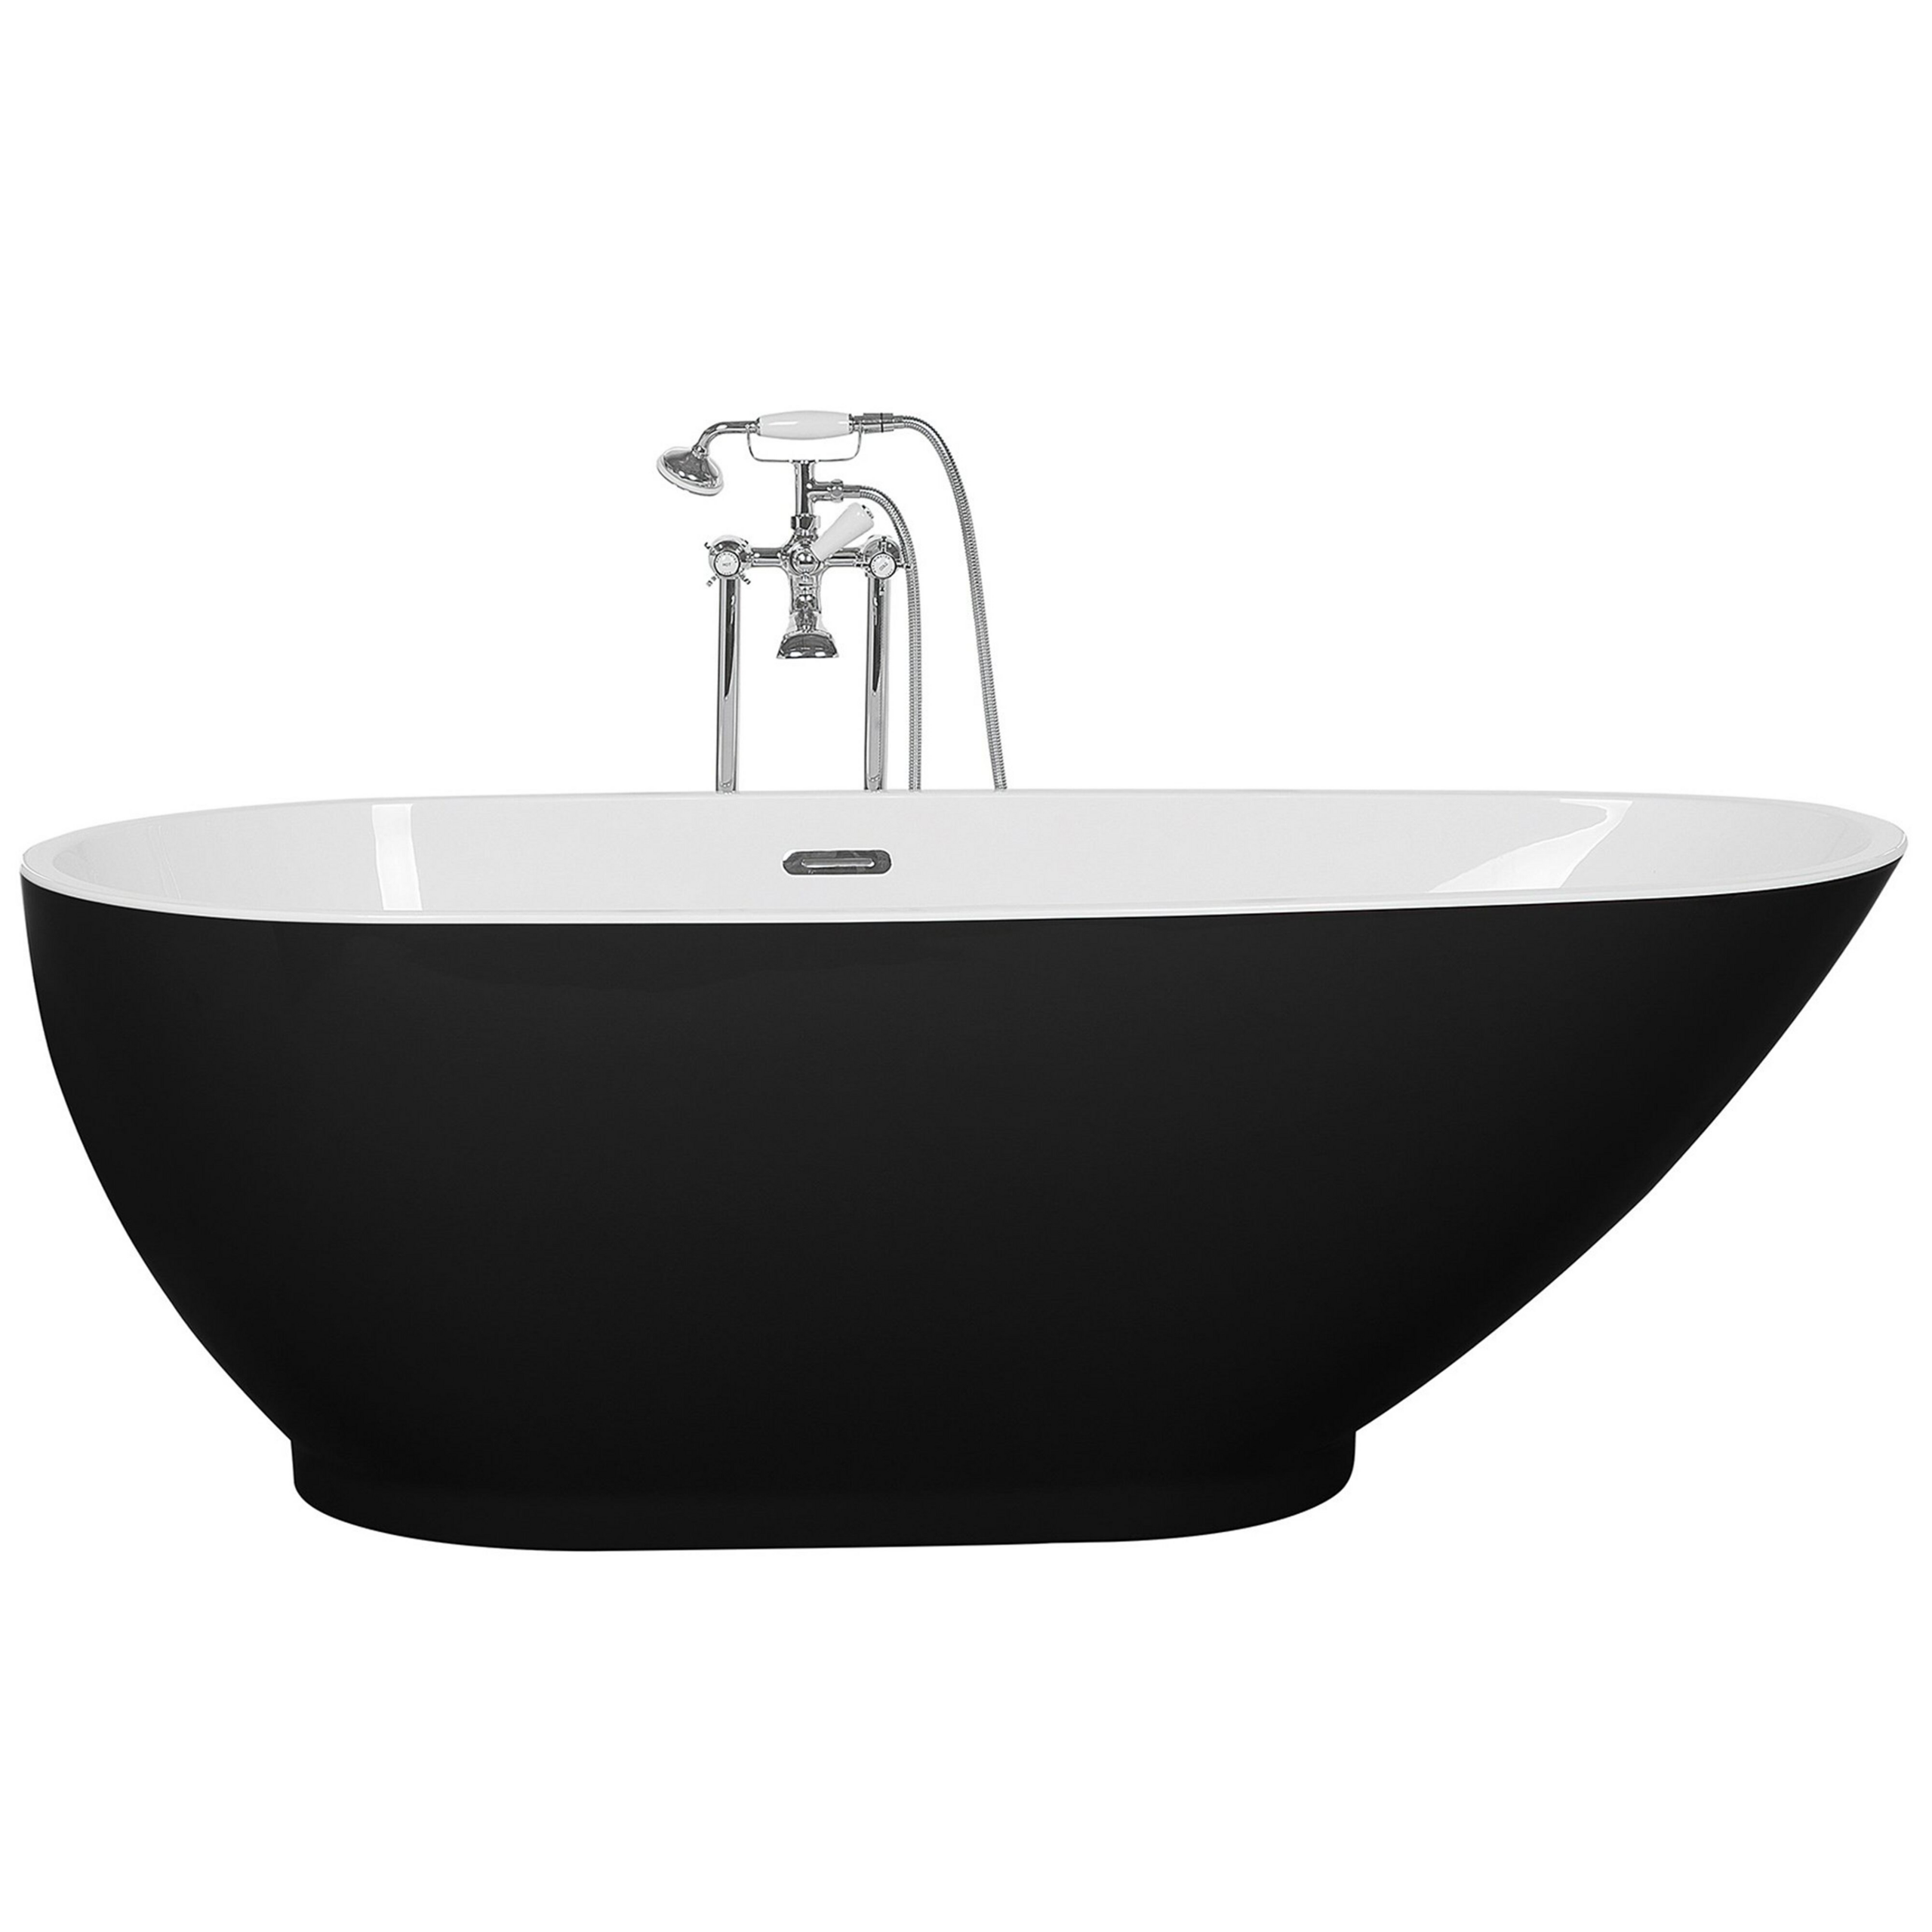 Beliani Freestanding Bath Black and White Sanitary Acrylic Single 173 x 82 cm Oval Modern Design